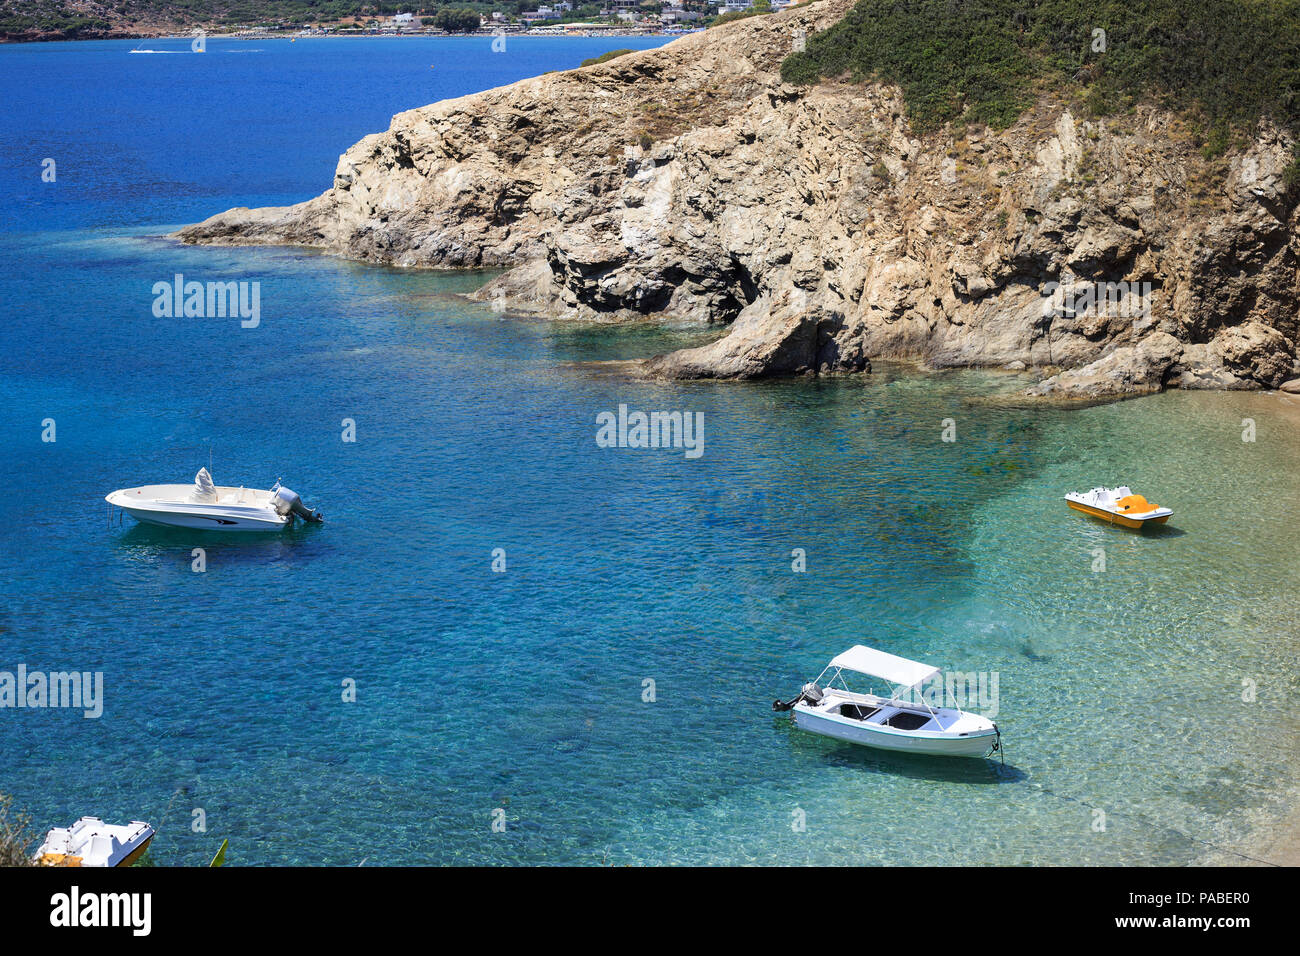 Mountains Bay in the Mediterranean Sea. Stock Photo